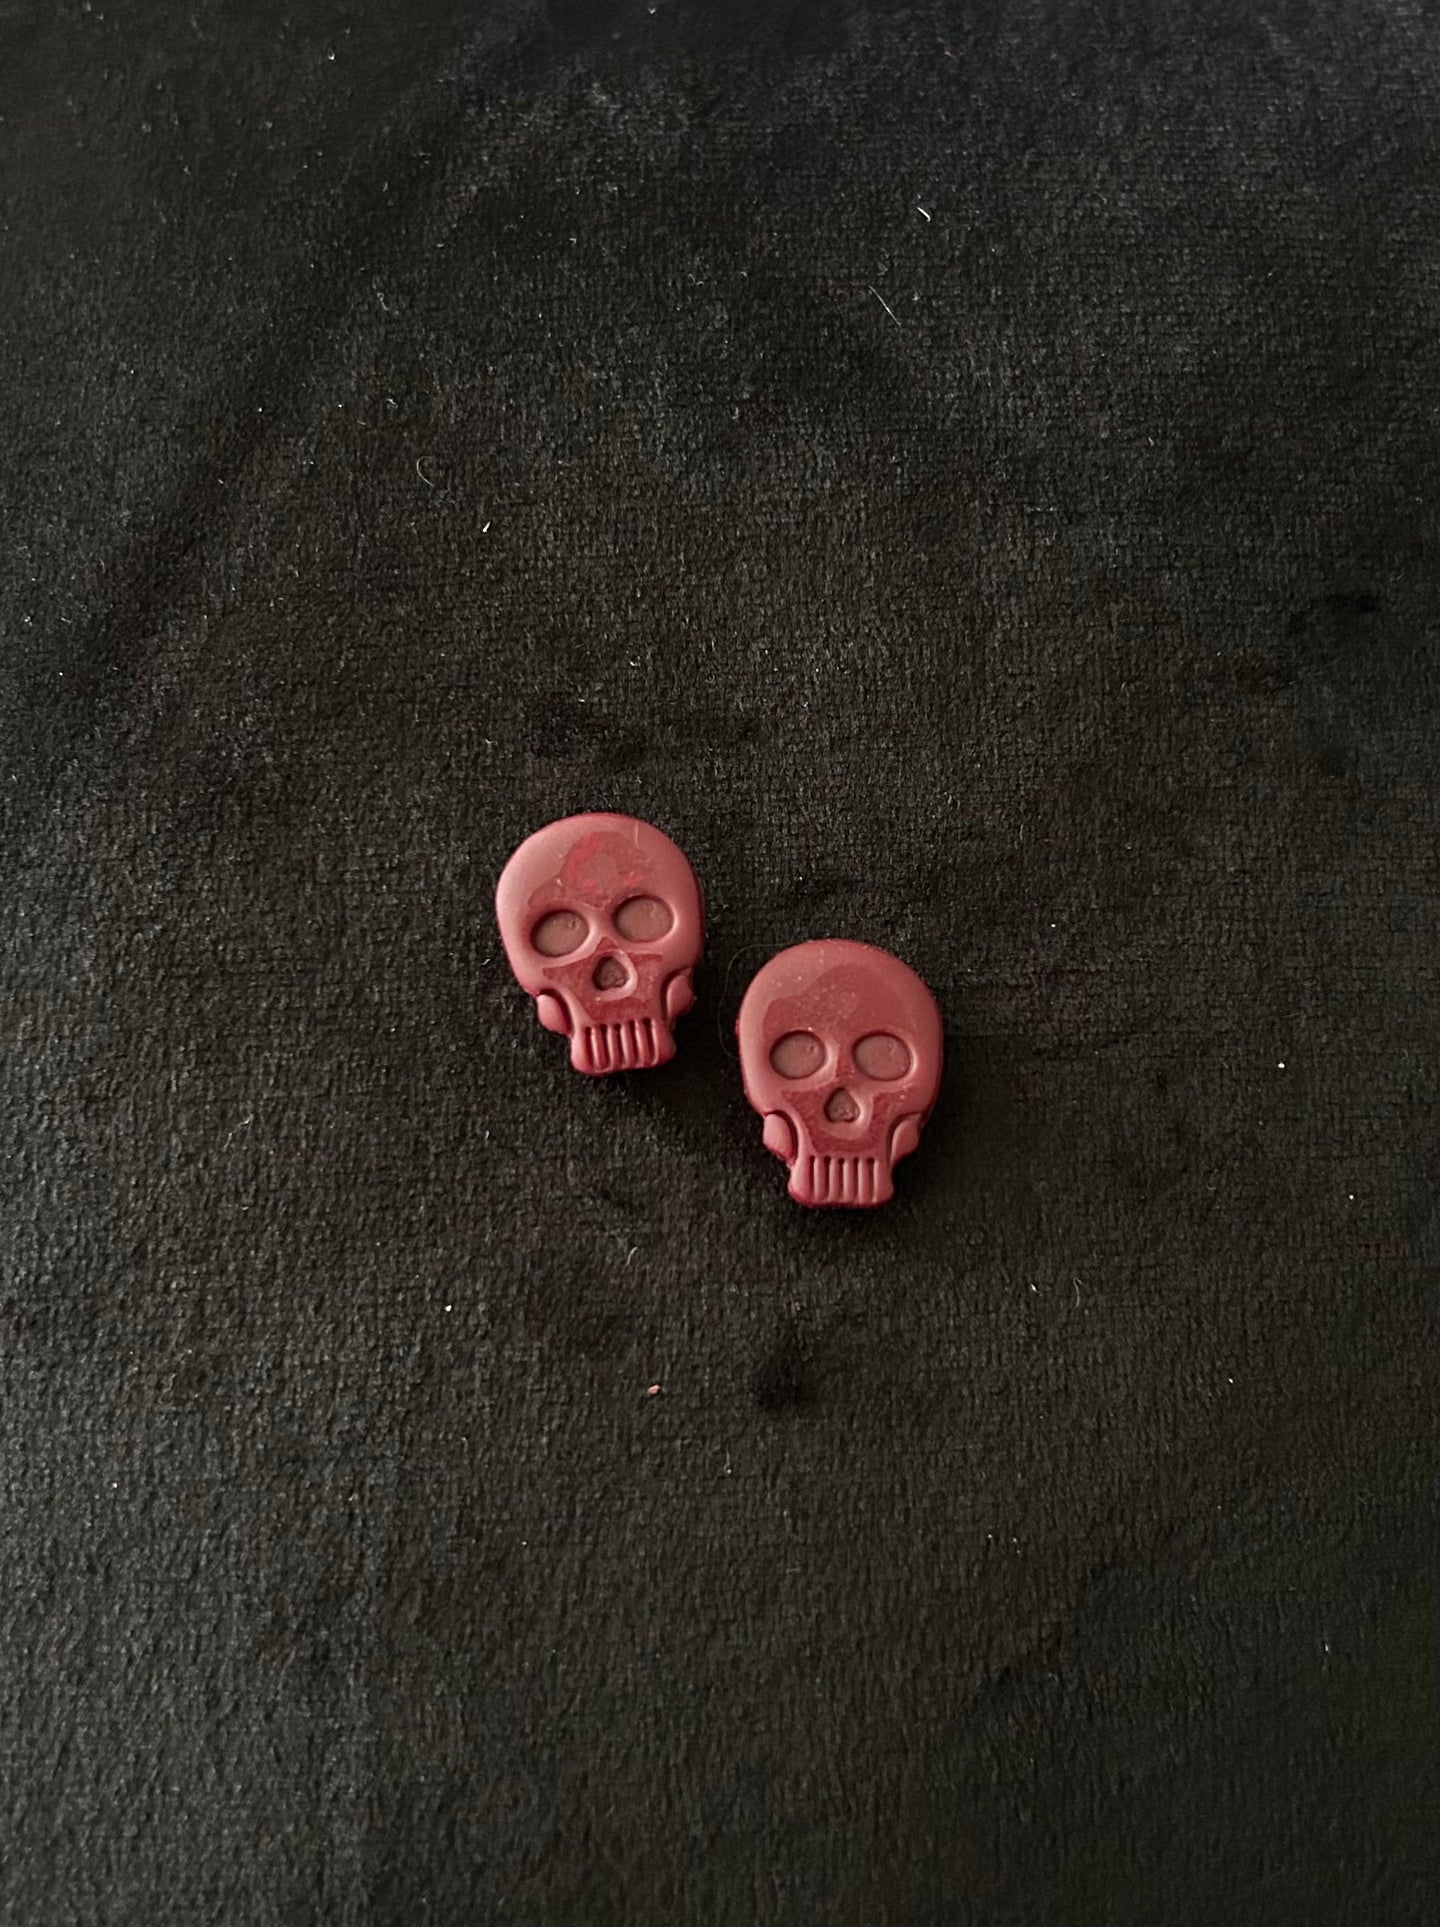 Crimson skulls